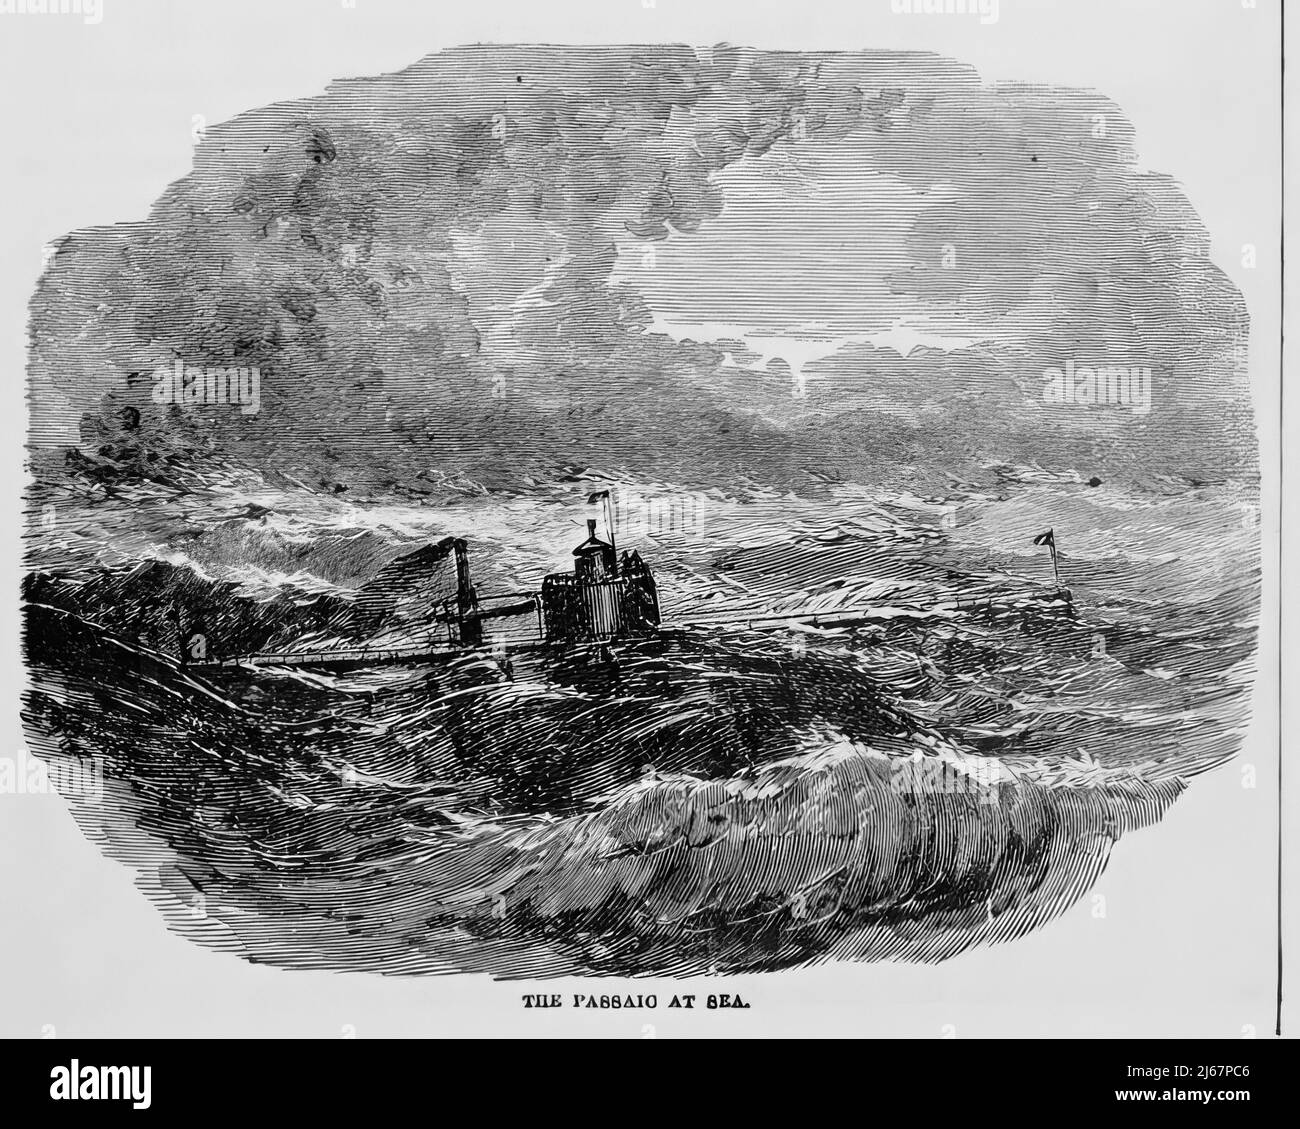 The USS Passaic at Sea, in the American Civil War. 19th century illustration Stock Photo